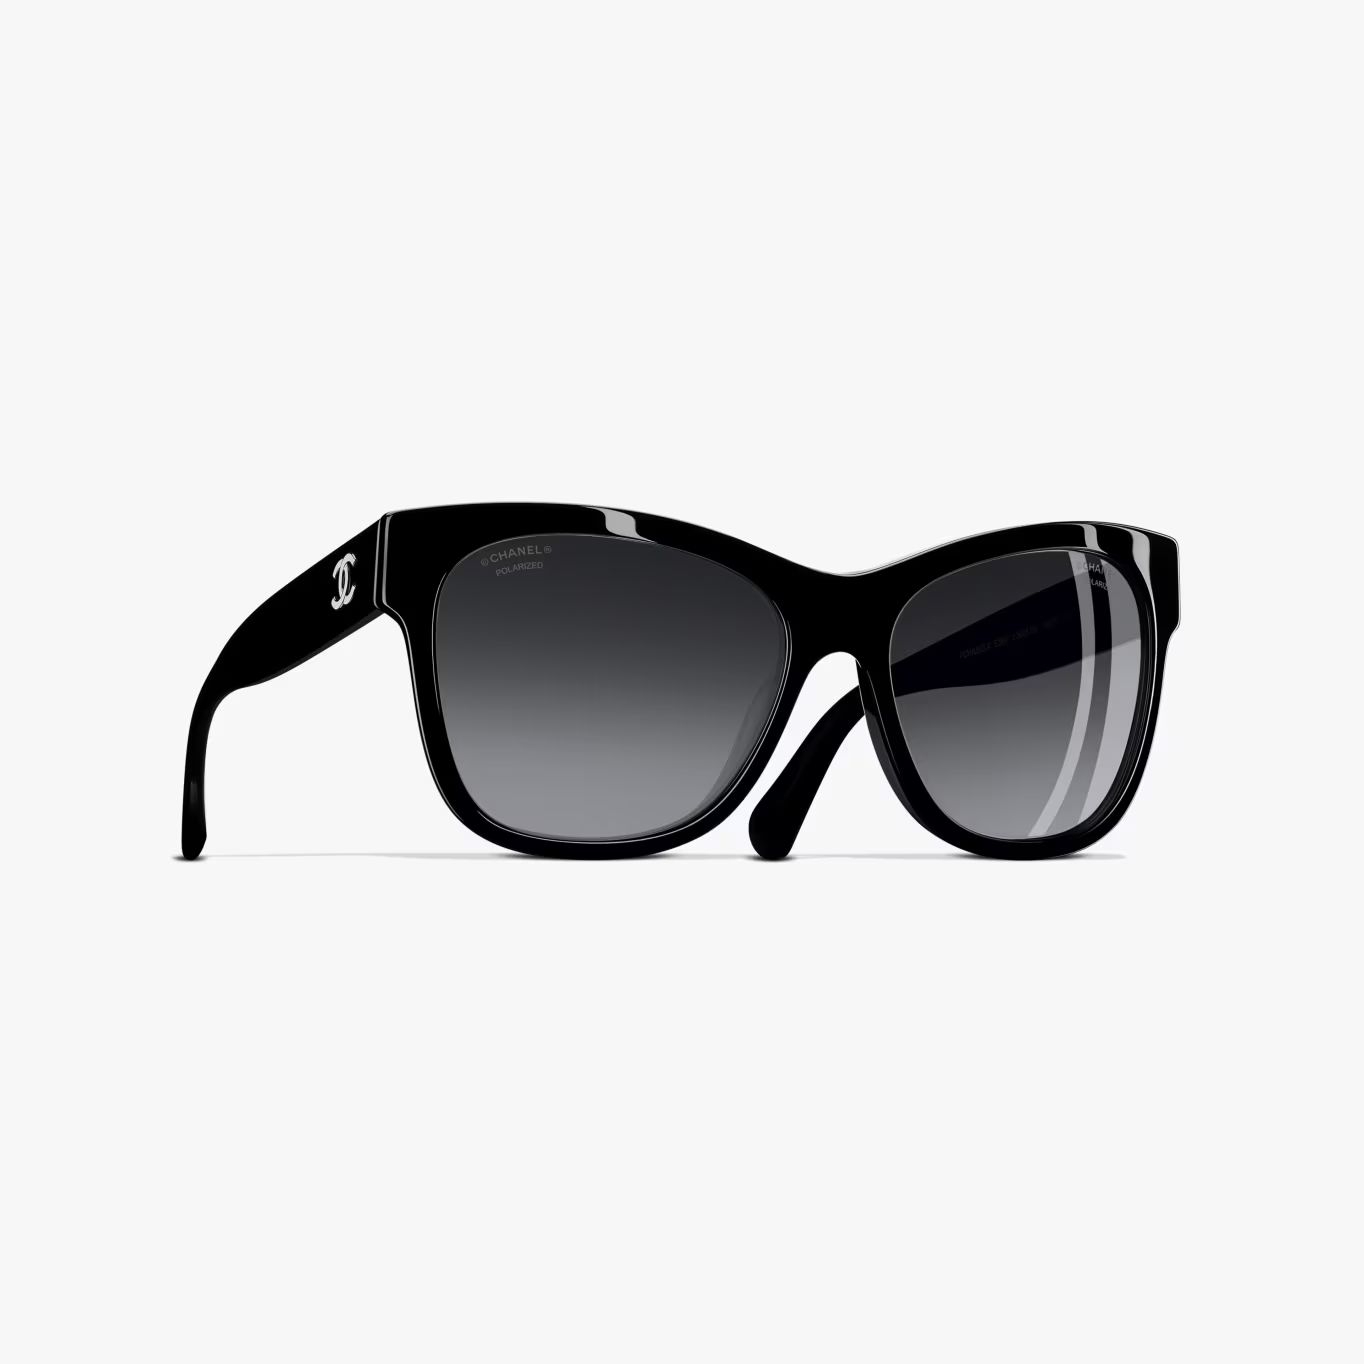 Sunglasses: Square Sunglasses, acetate — Fashion | CHANEL | Chanel, Inc. (US)